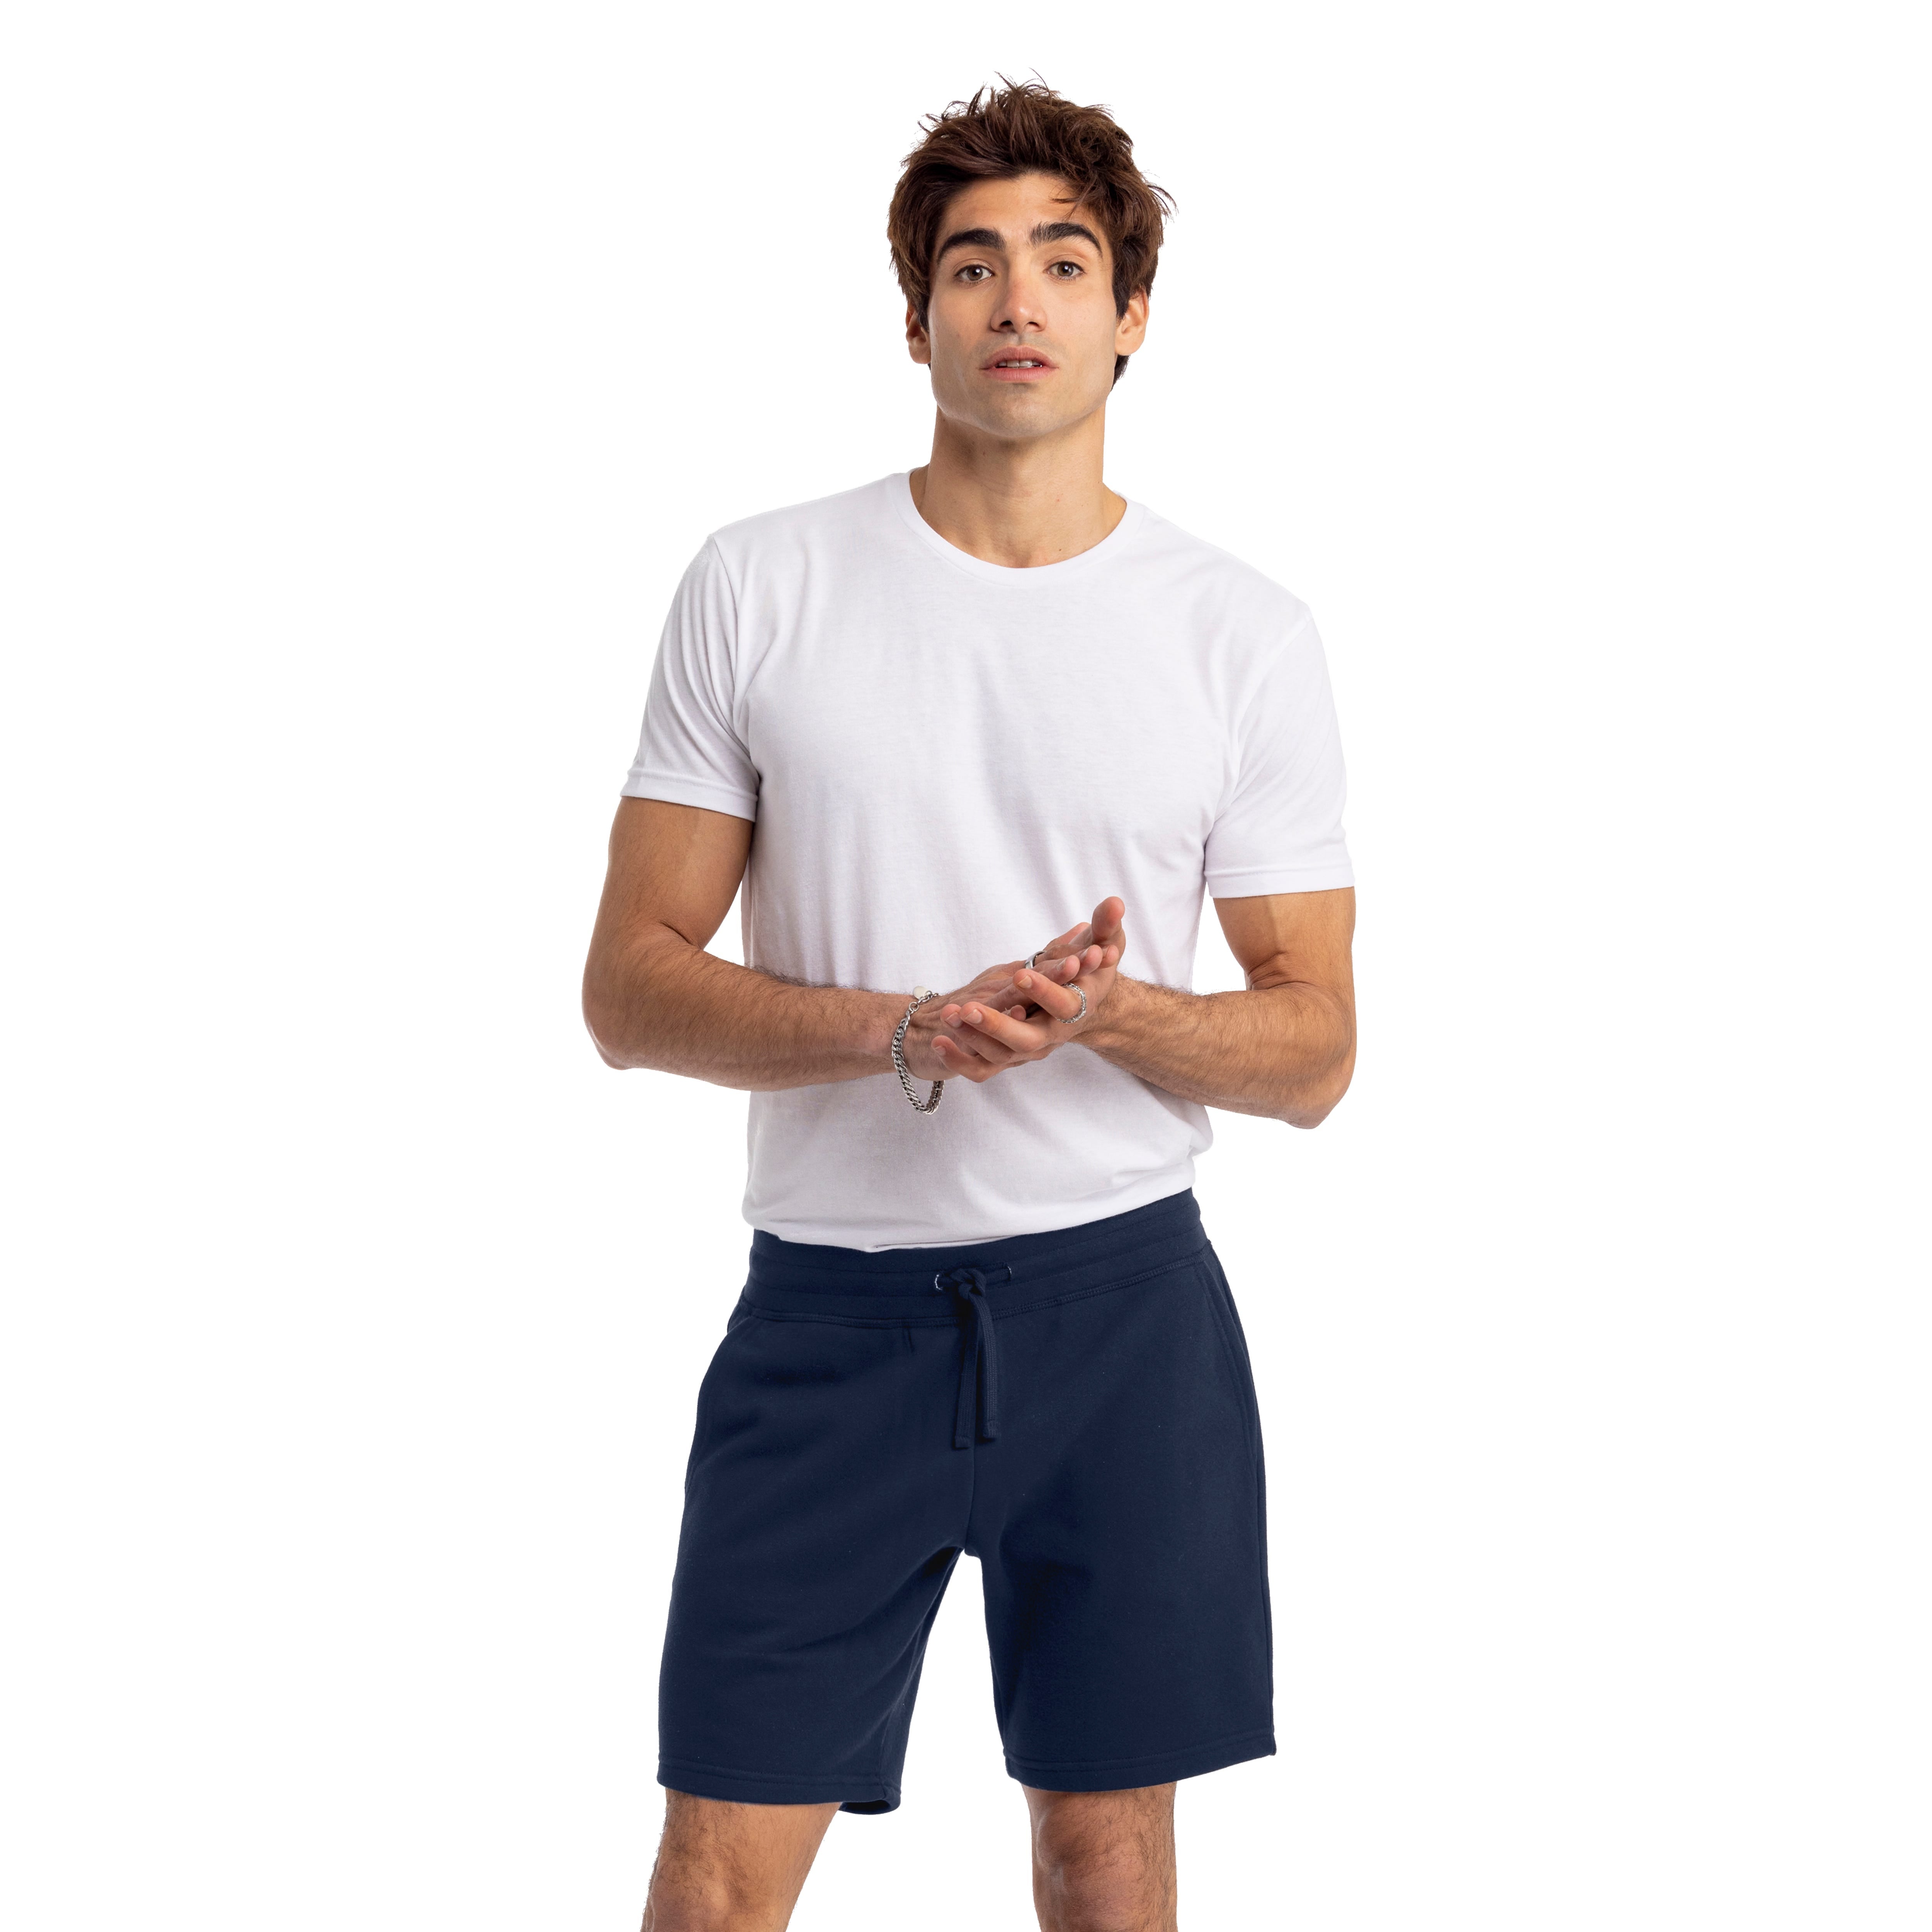 Unisex Fleece Sweat Shorts